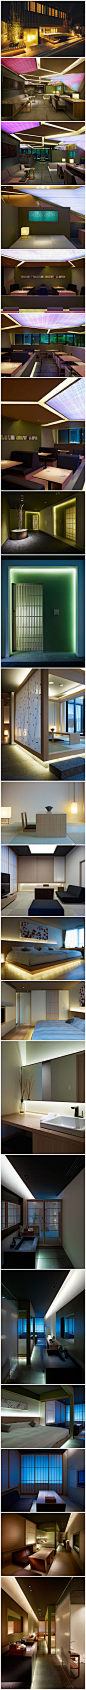 Kanra Kyoto现代日式酒店设计|微刊 - 悦读喜欢